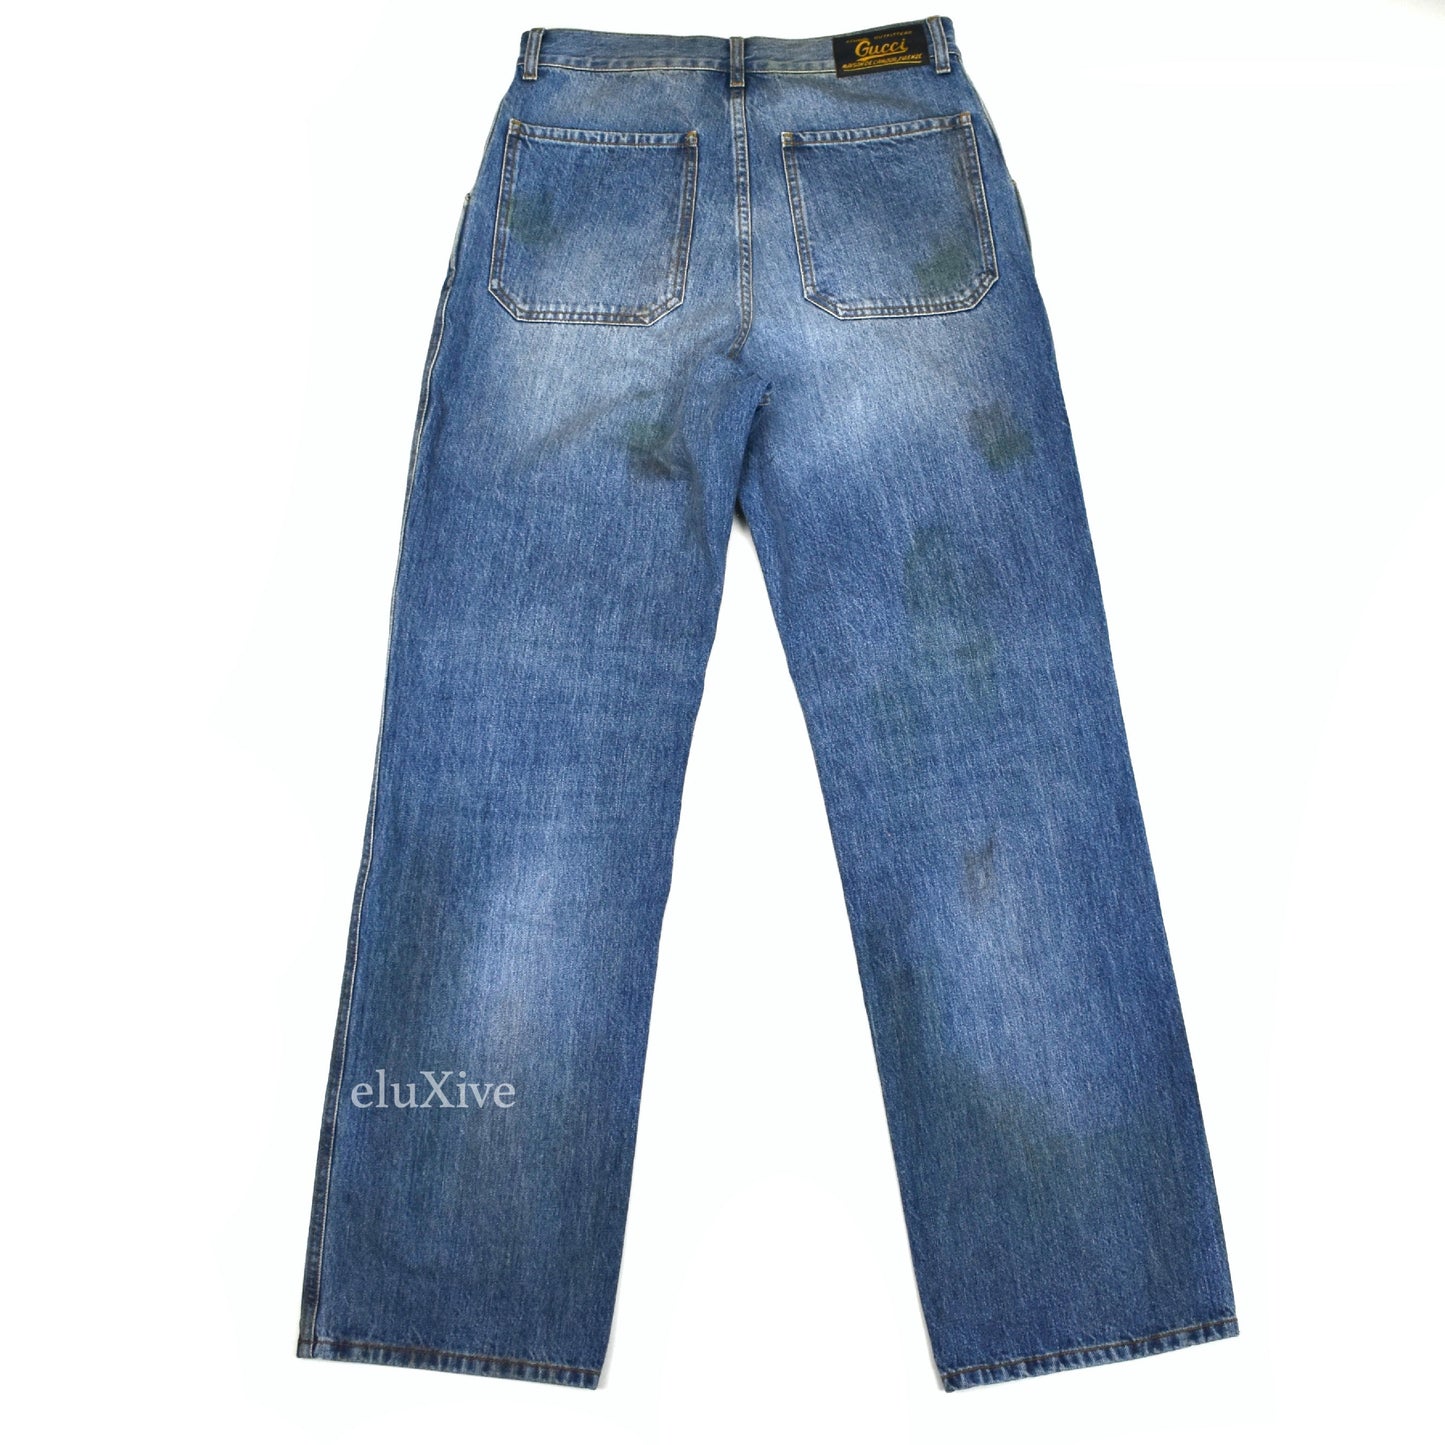 Gucci - Grass Stain Effect Denim Jeans